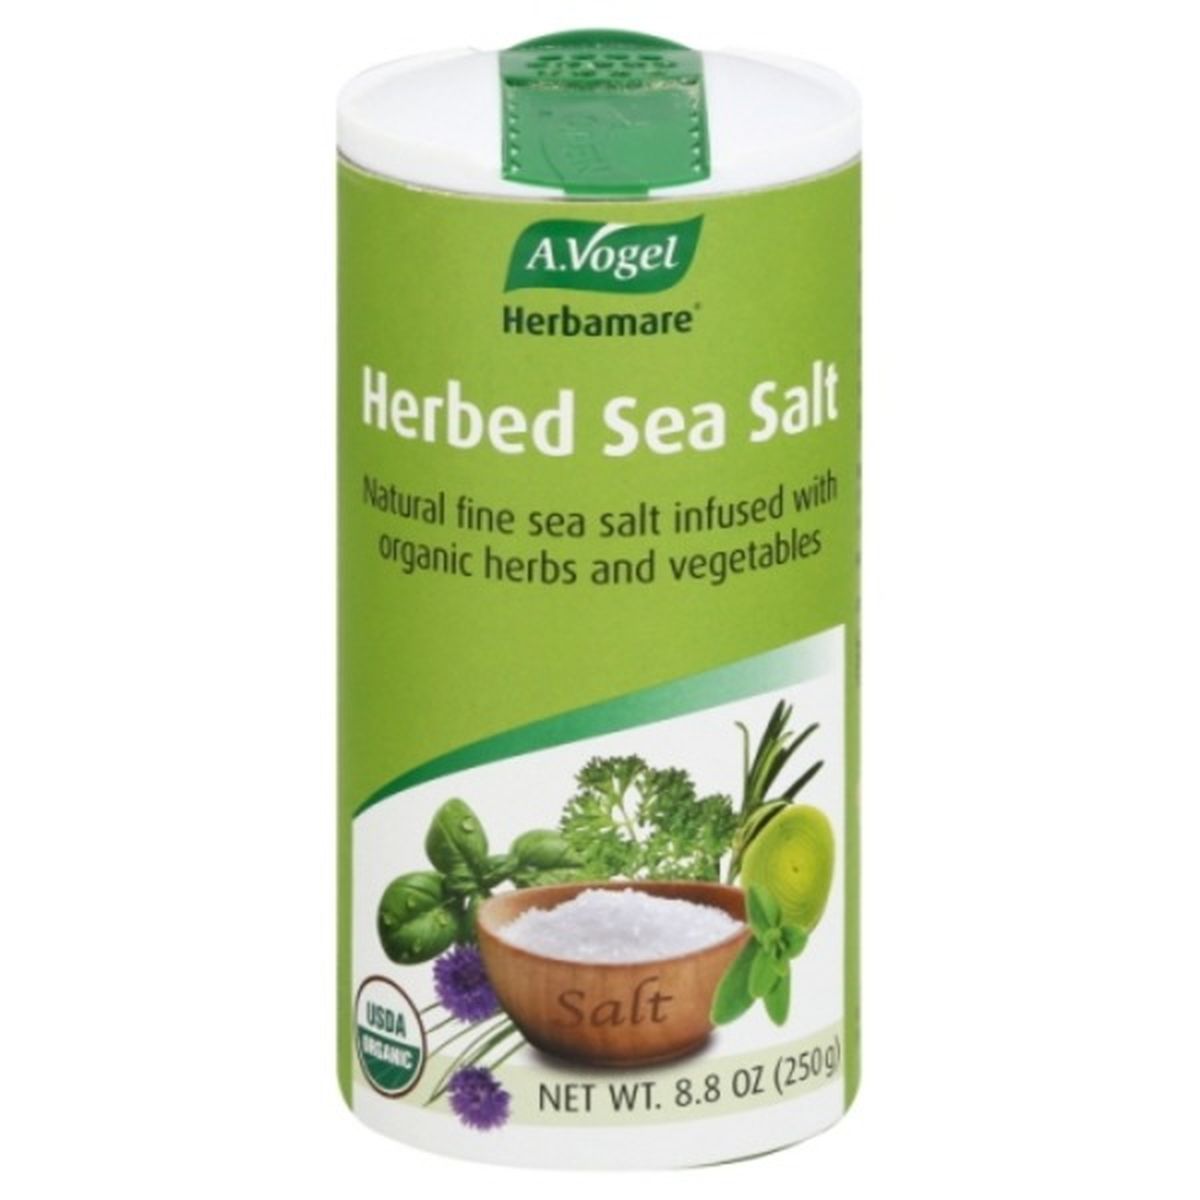 Calories in Herbamare A.Vogel Sea Salt, Herbed